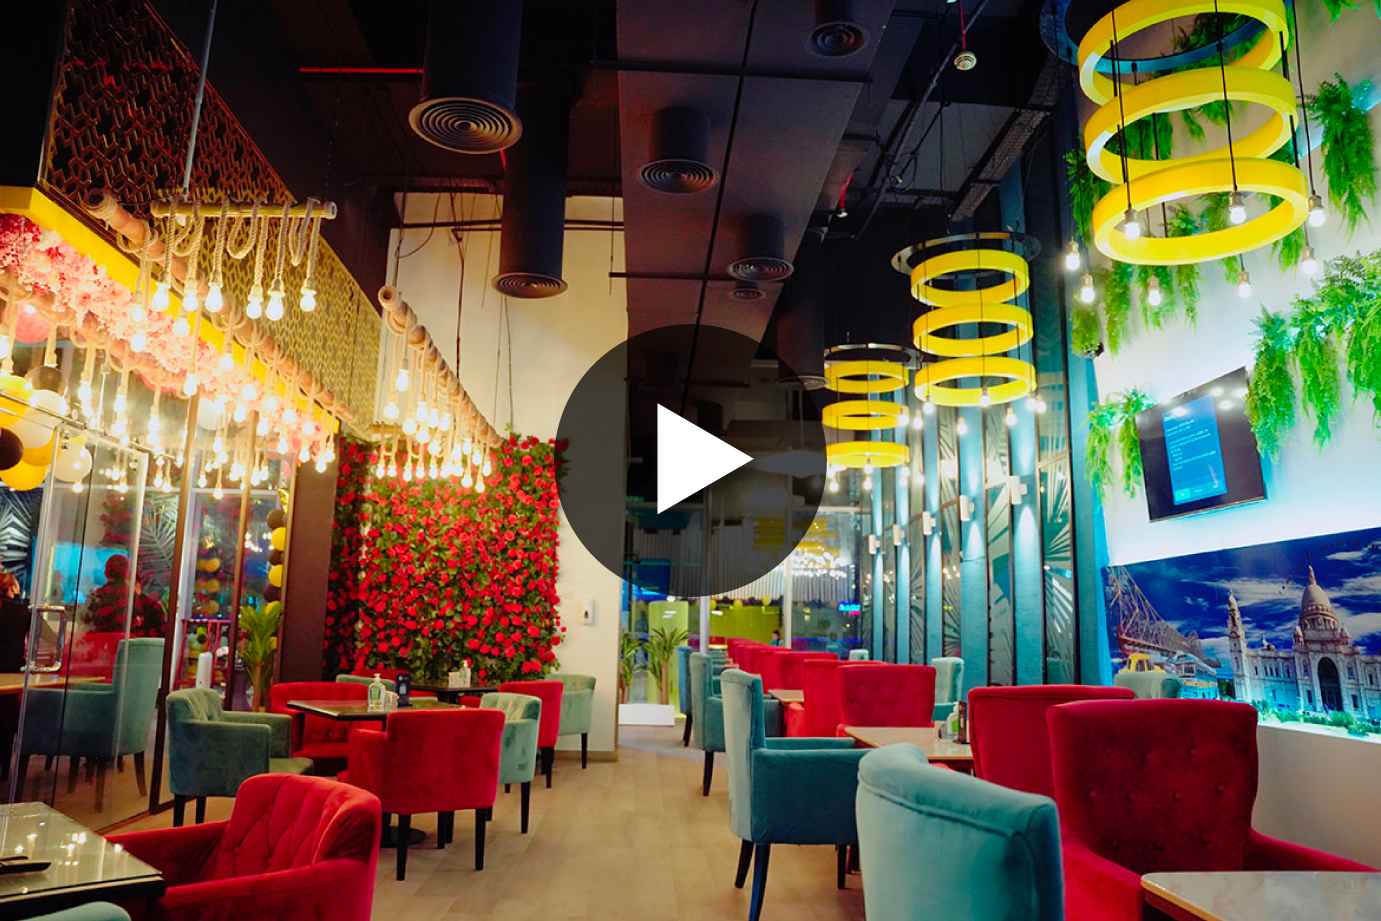 La Letizia Cafe video by sajid sulaiman